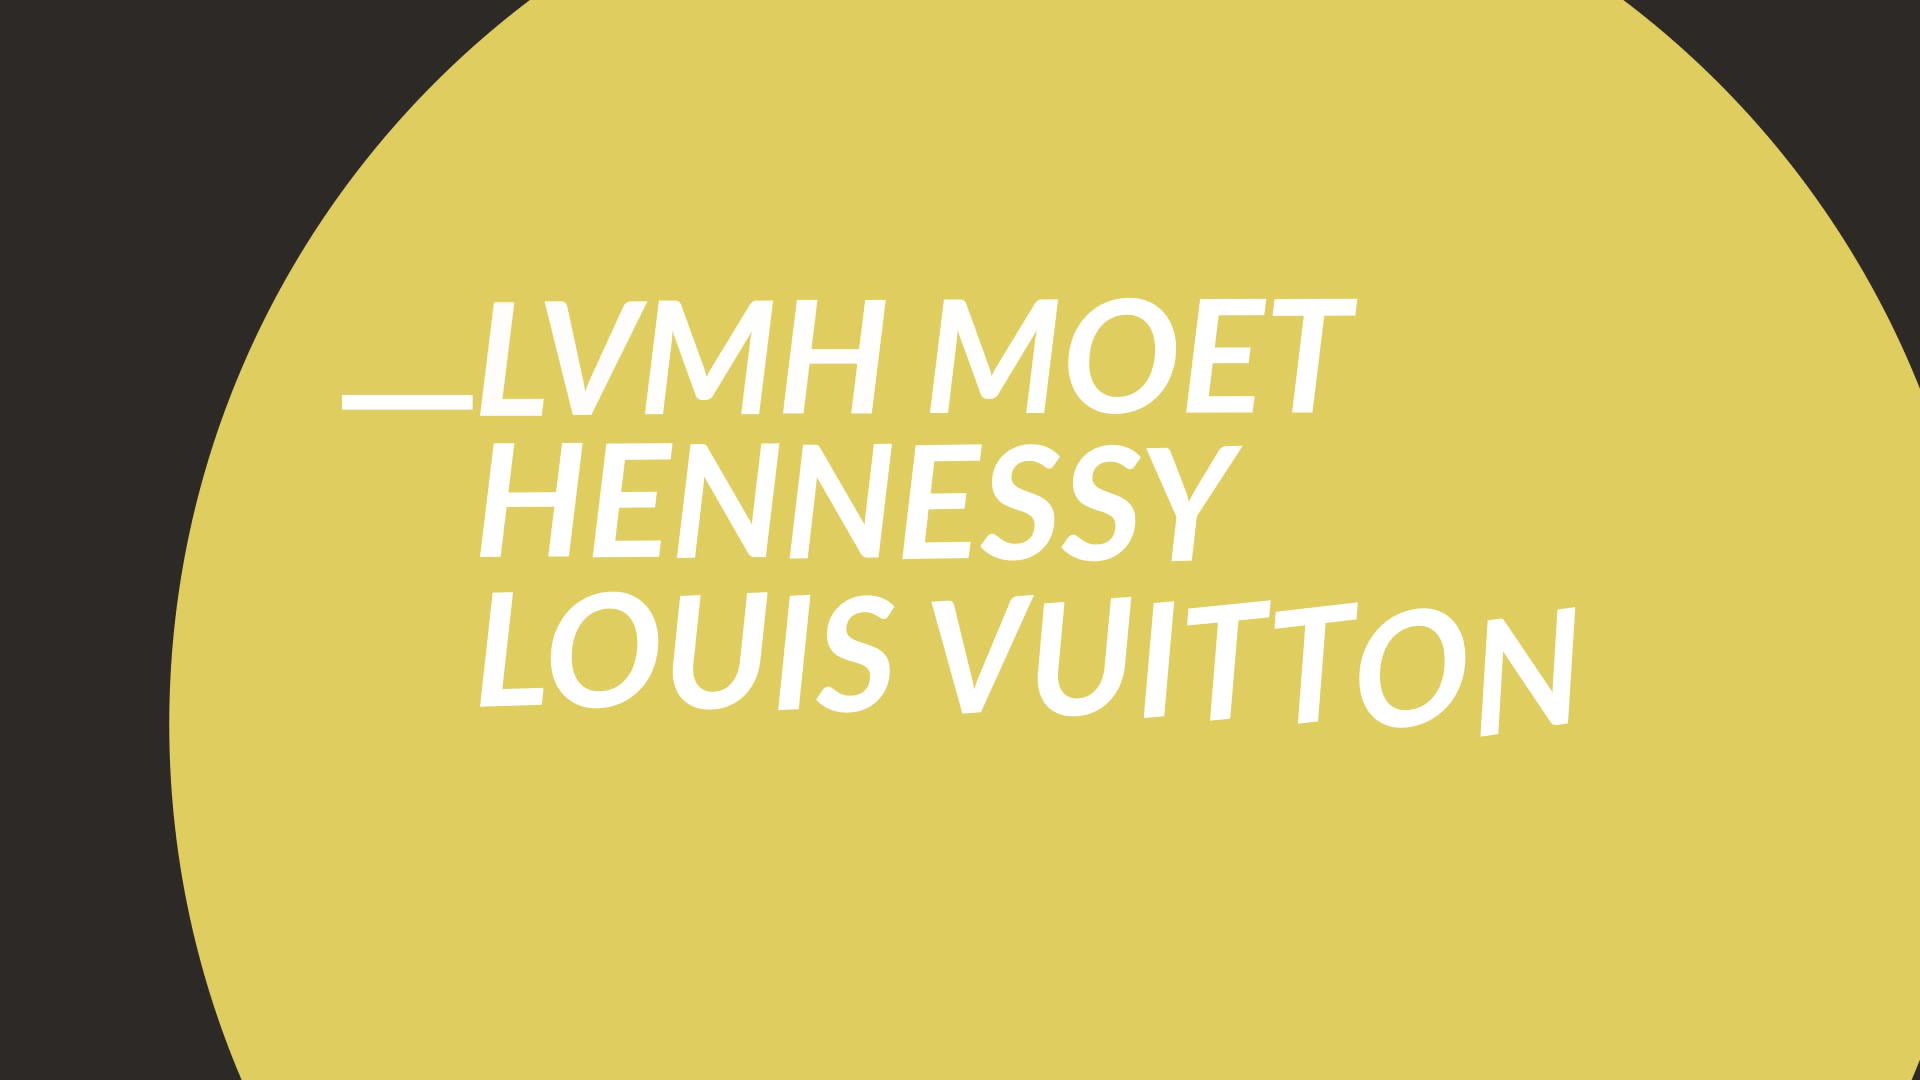 LVMH – Siège Social, Adresse et Contact